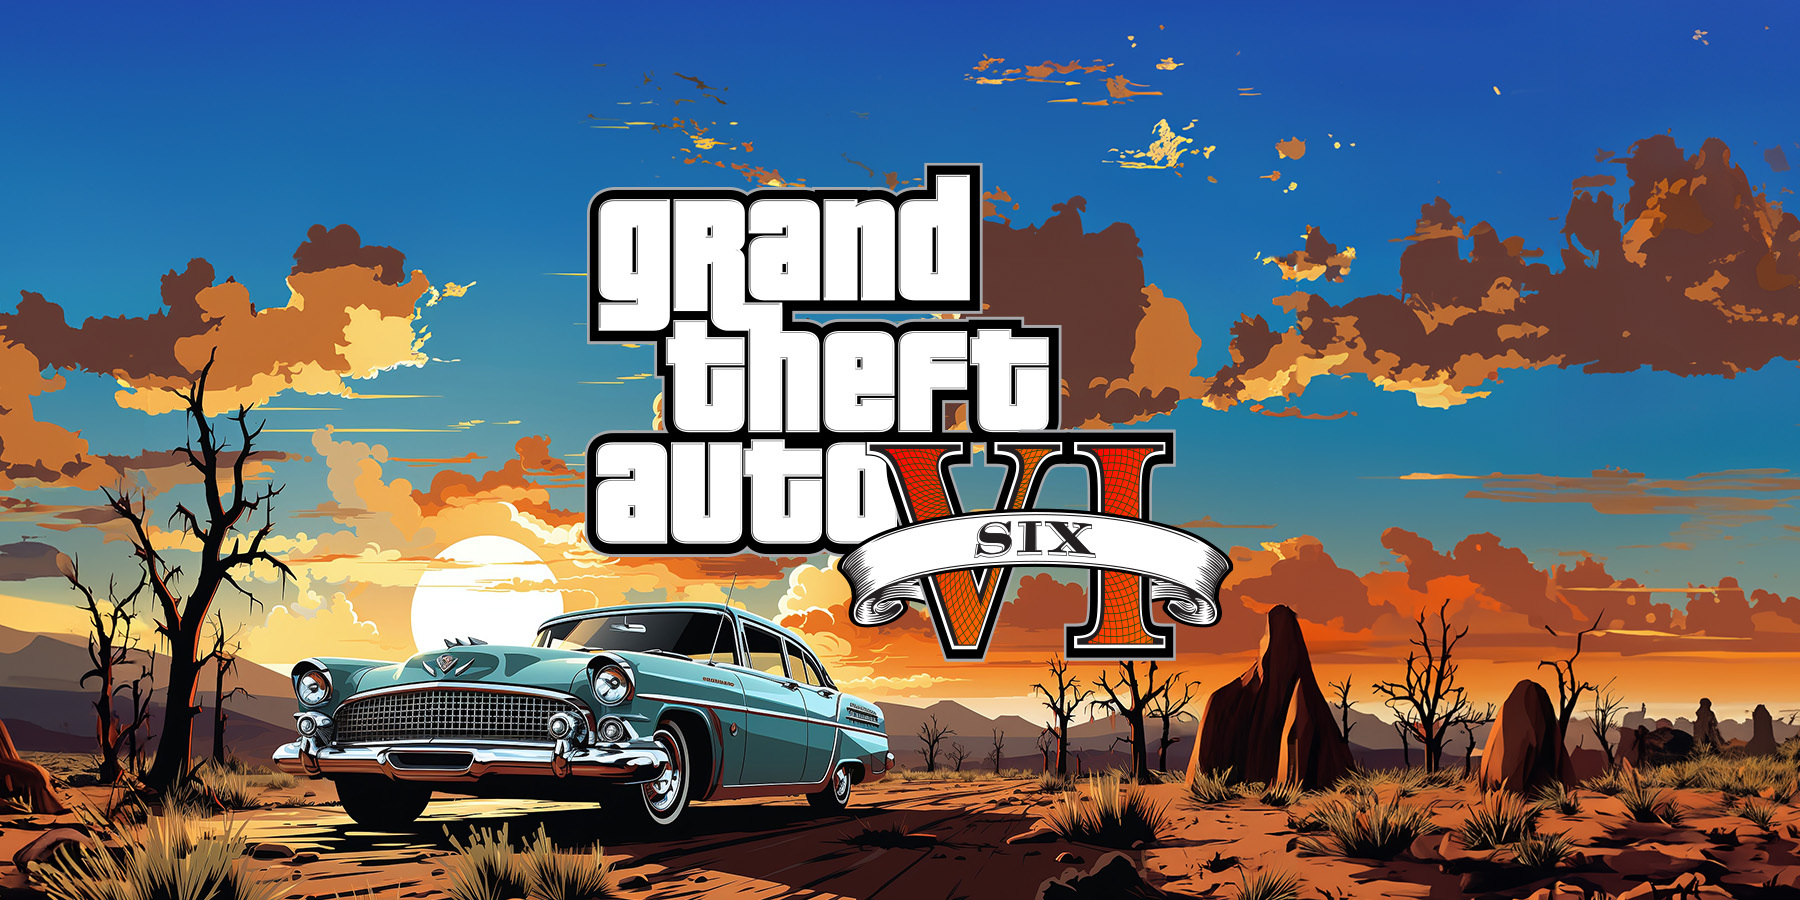 Rockstar Games Officially Releases GTA 6 Trailer